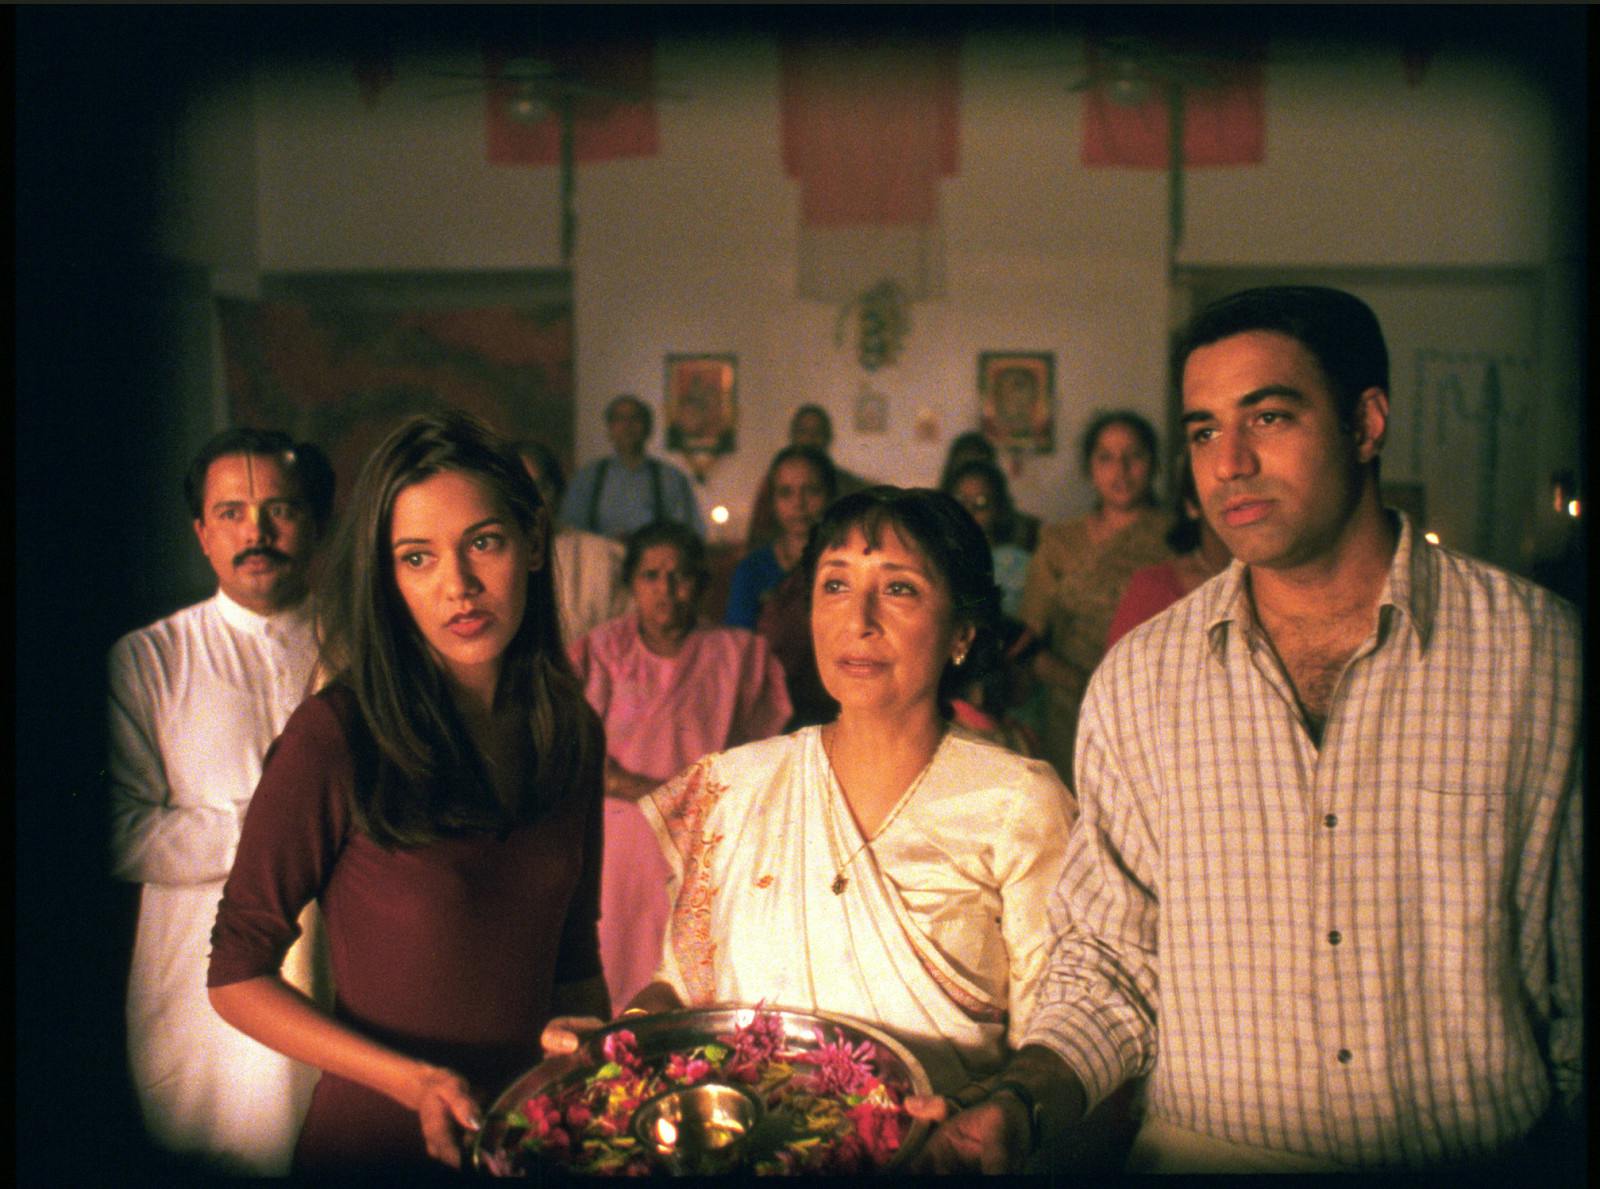 Sheetal Sheth, Madhur Jaffrey, Faran Tahir in "ABCD" (Laxmi Pictures)